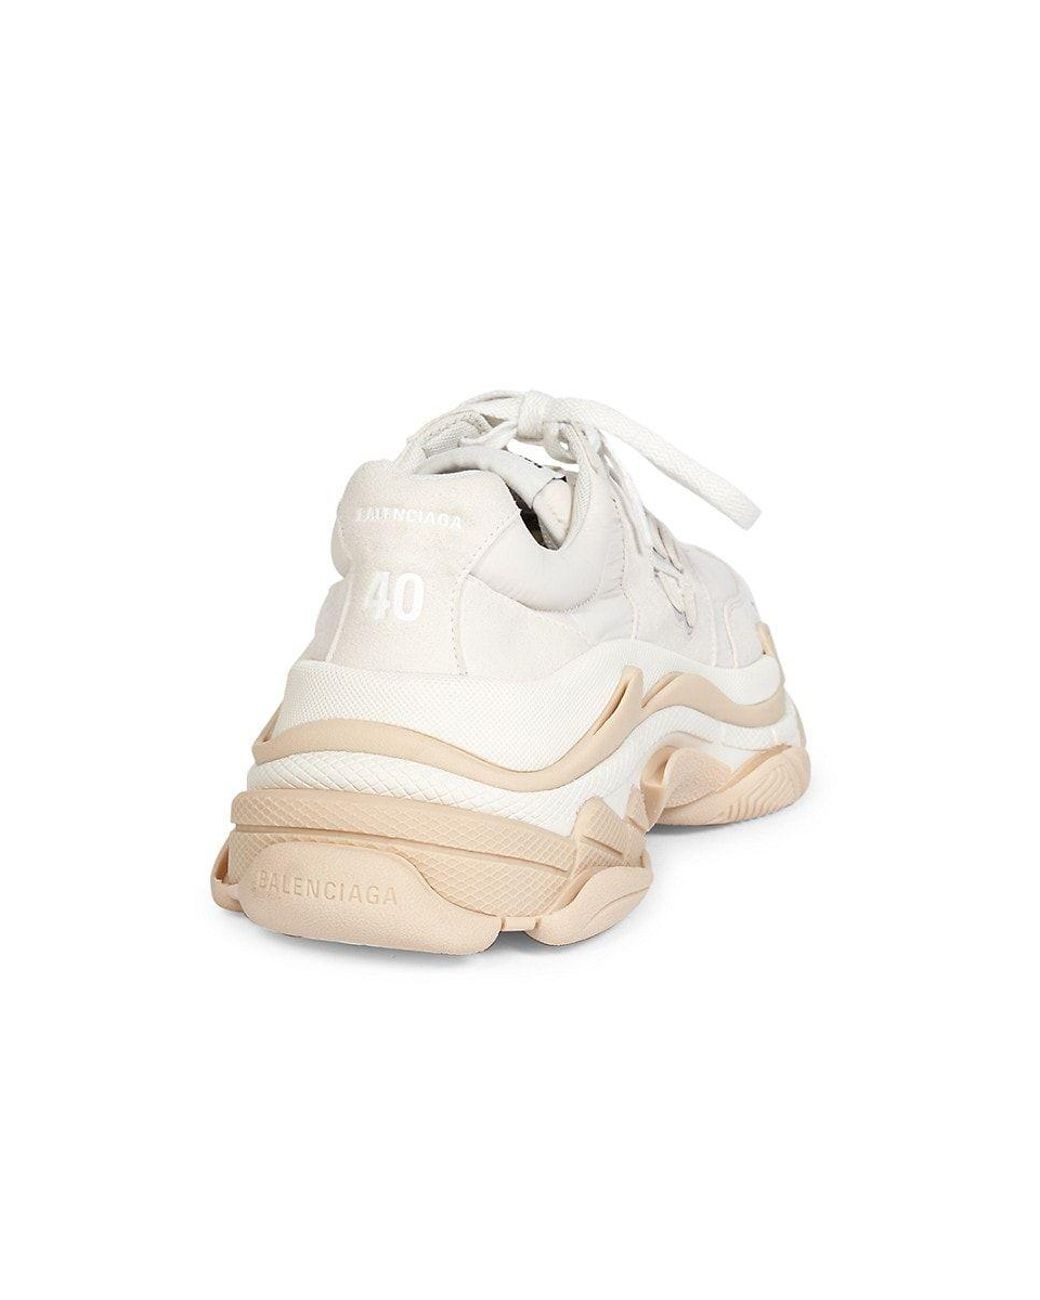 Balenciaga Triple S Nylon Sneakers in White | Lyst